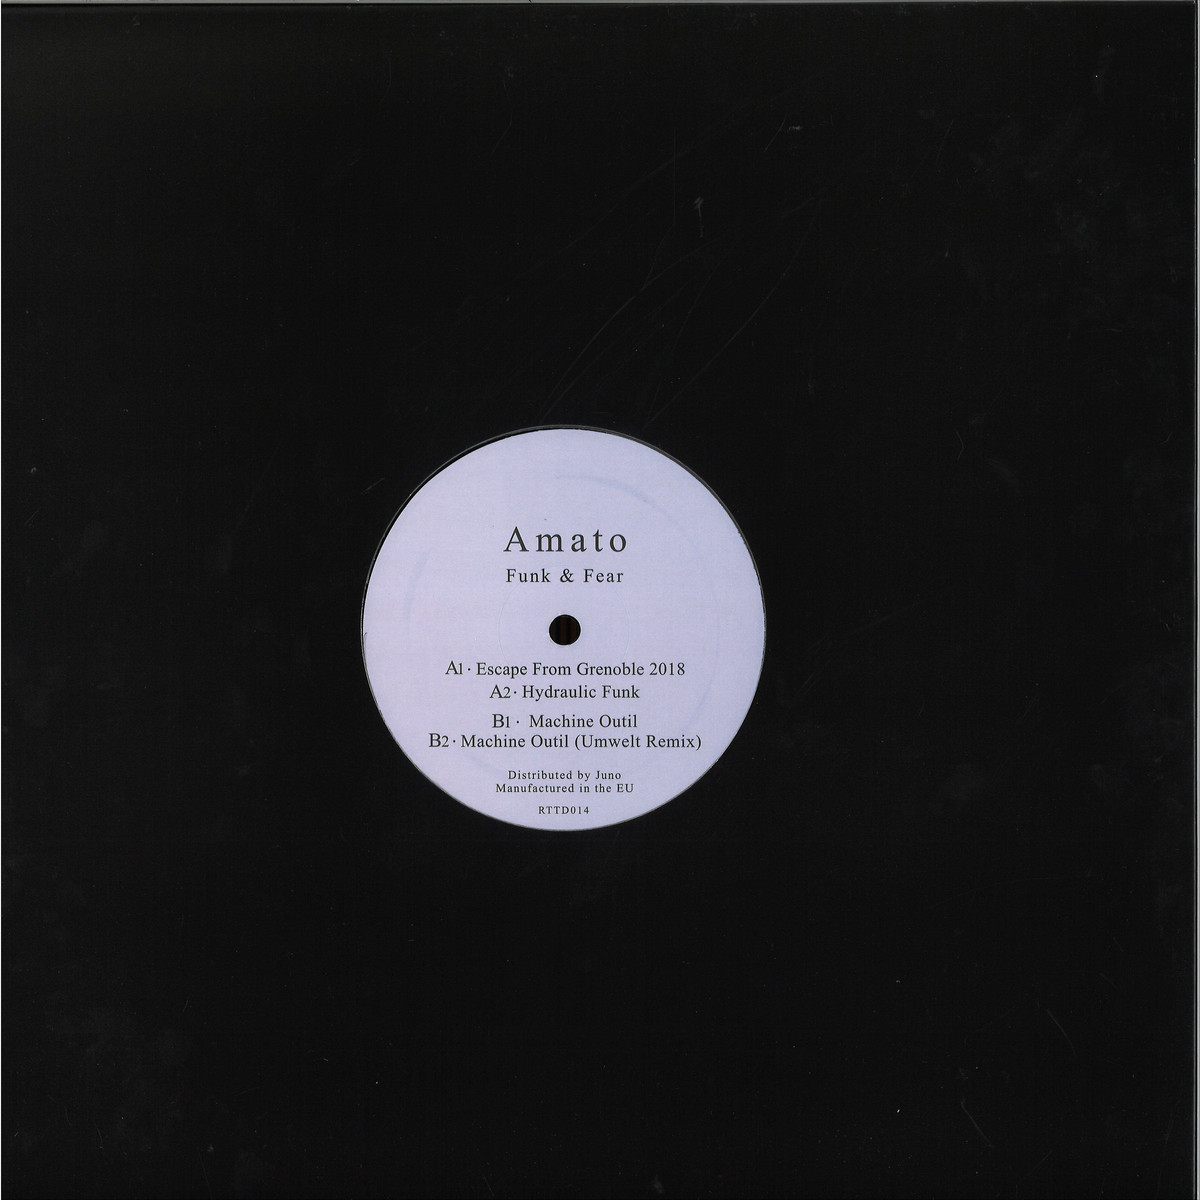 Amato - Funk & Fear / Return To Disorder RTTD014 - Vinyl